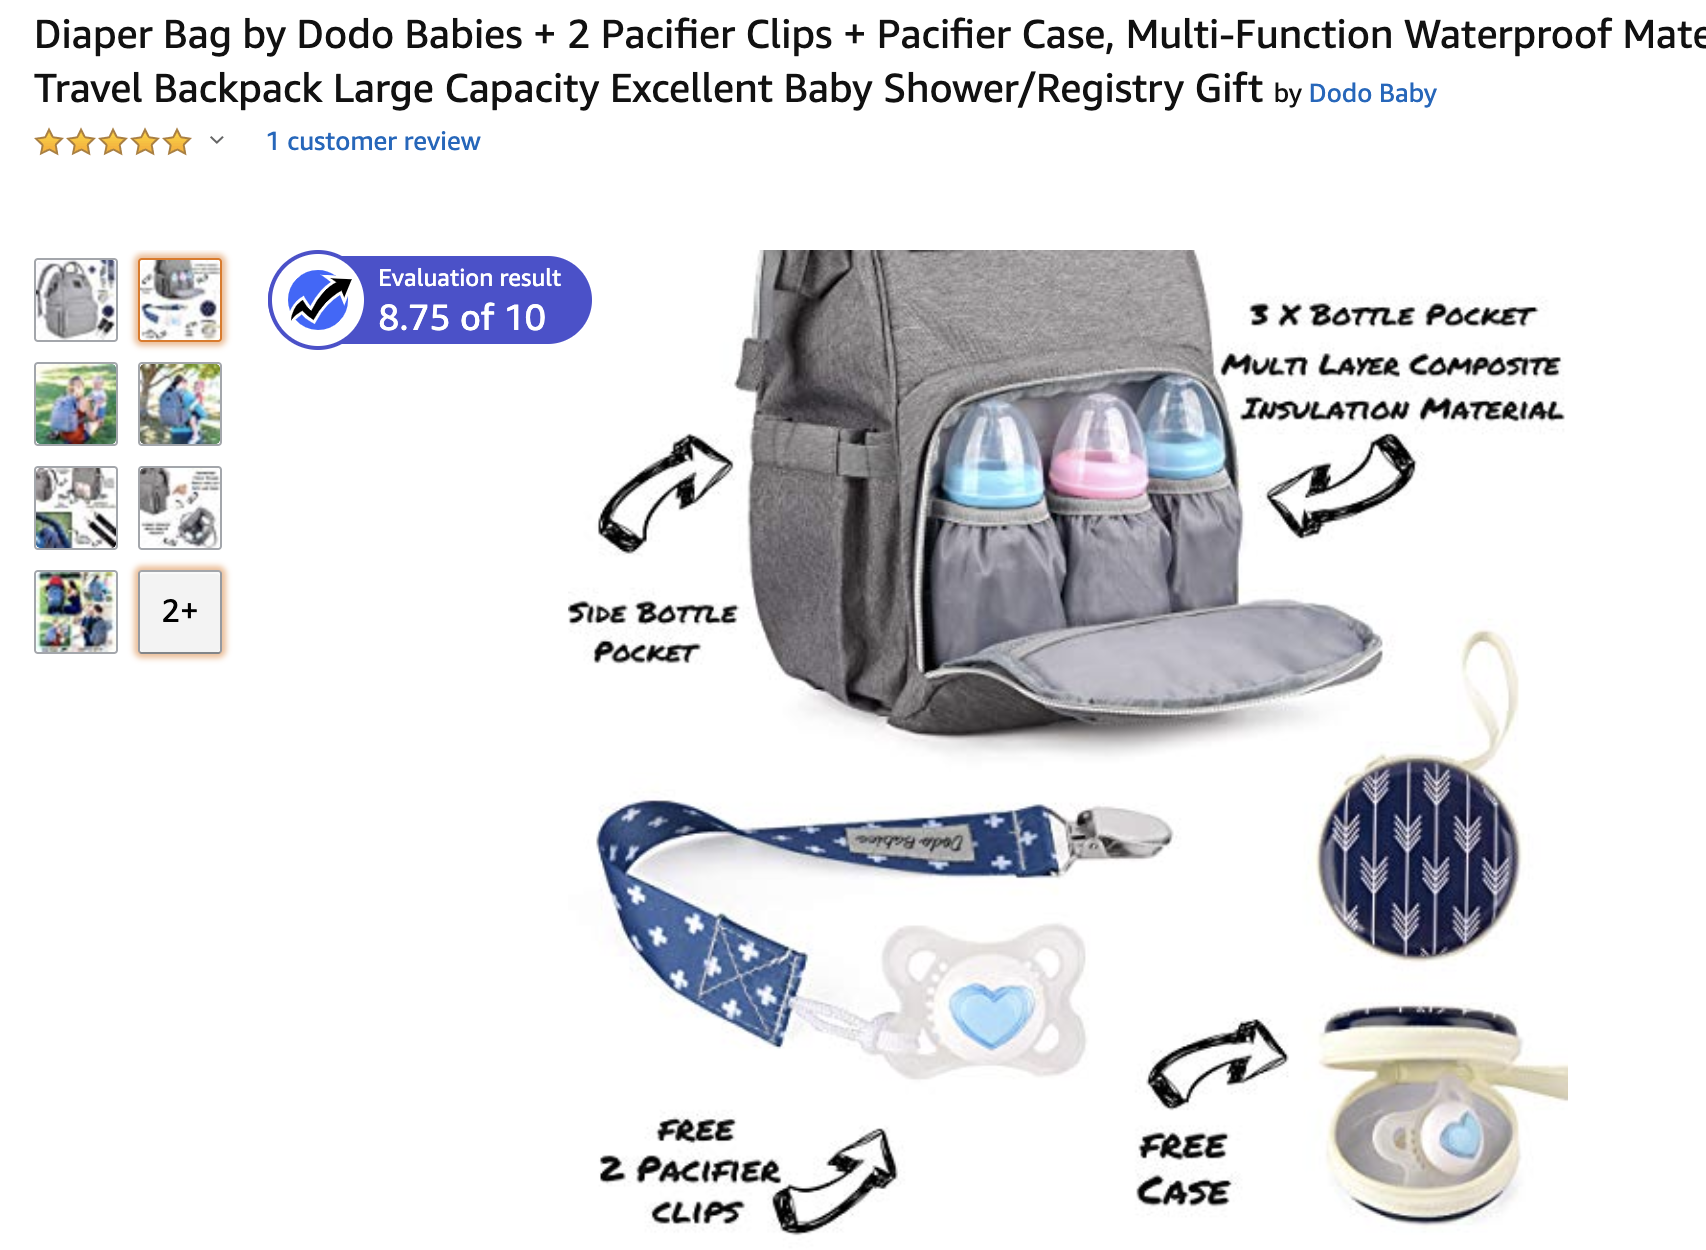 An Amazon product diaper bag